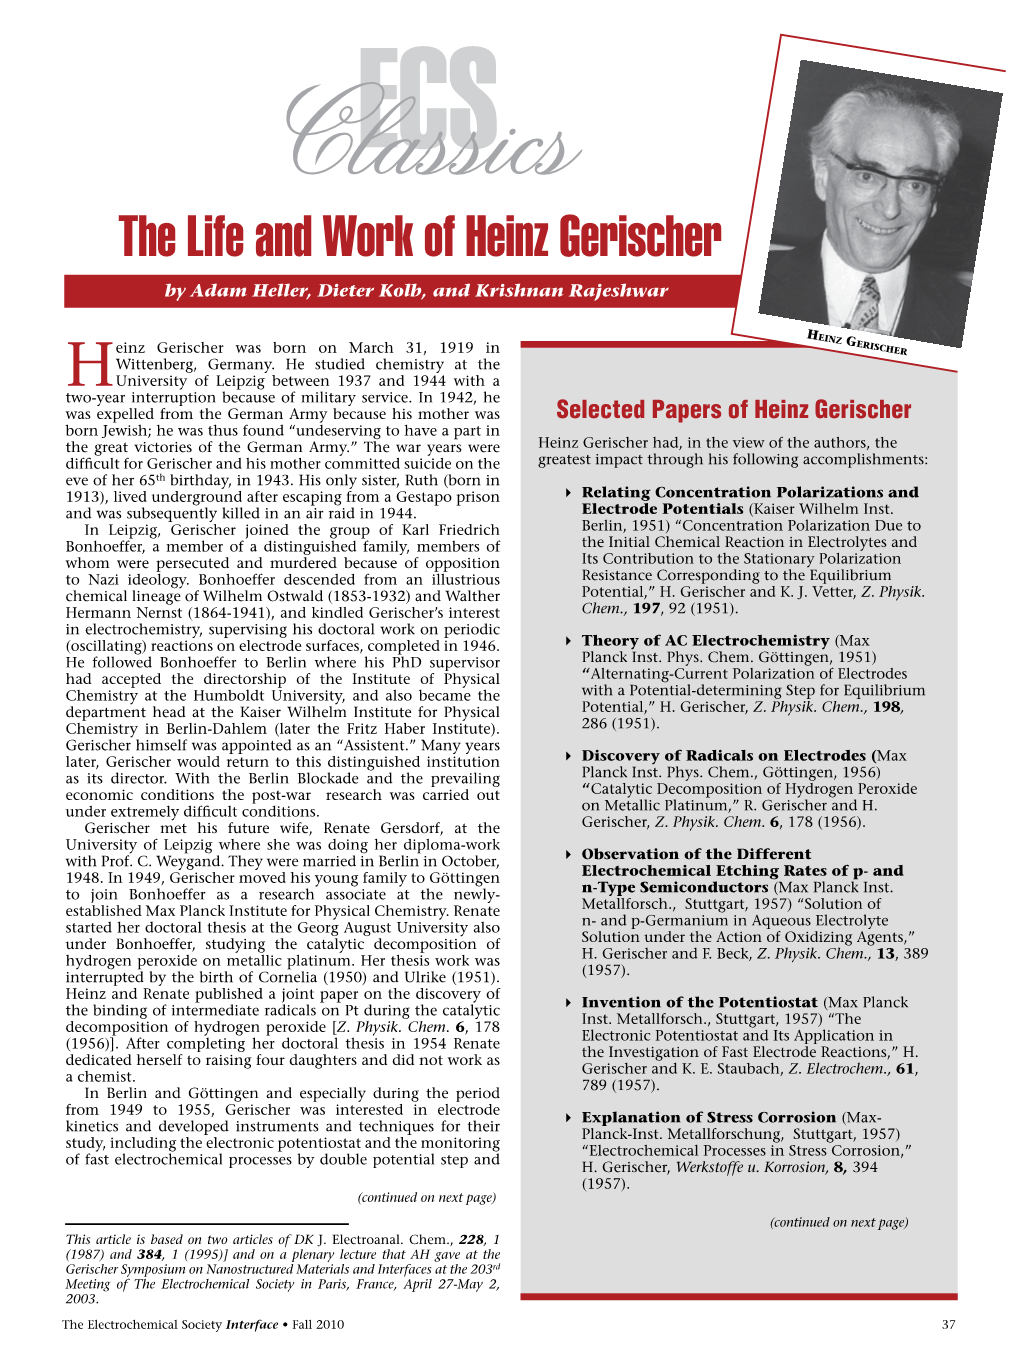 The Life and Work of Heinz Gerischer by Adam Heller, Dieter Kolb, and Krishnan Rajeshwar